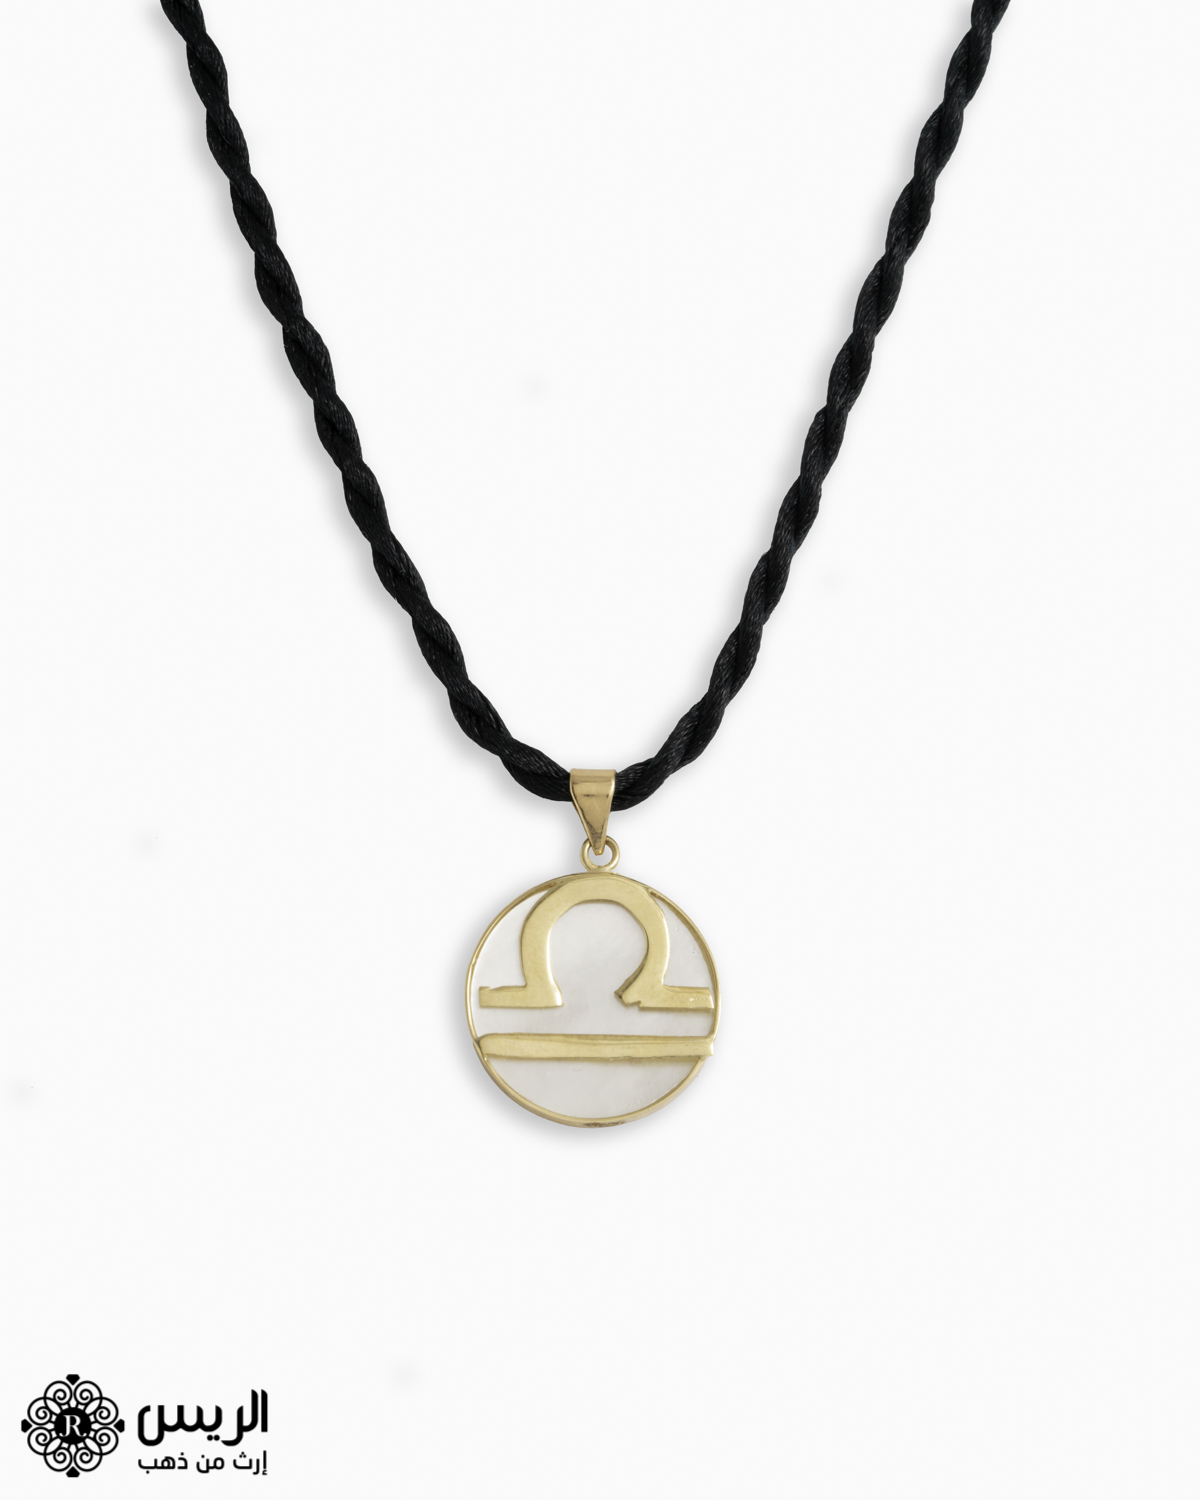 Shell Necklace Libra Zodiac sign